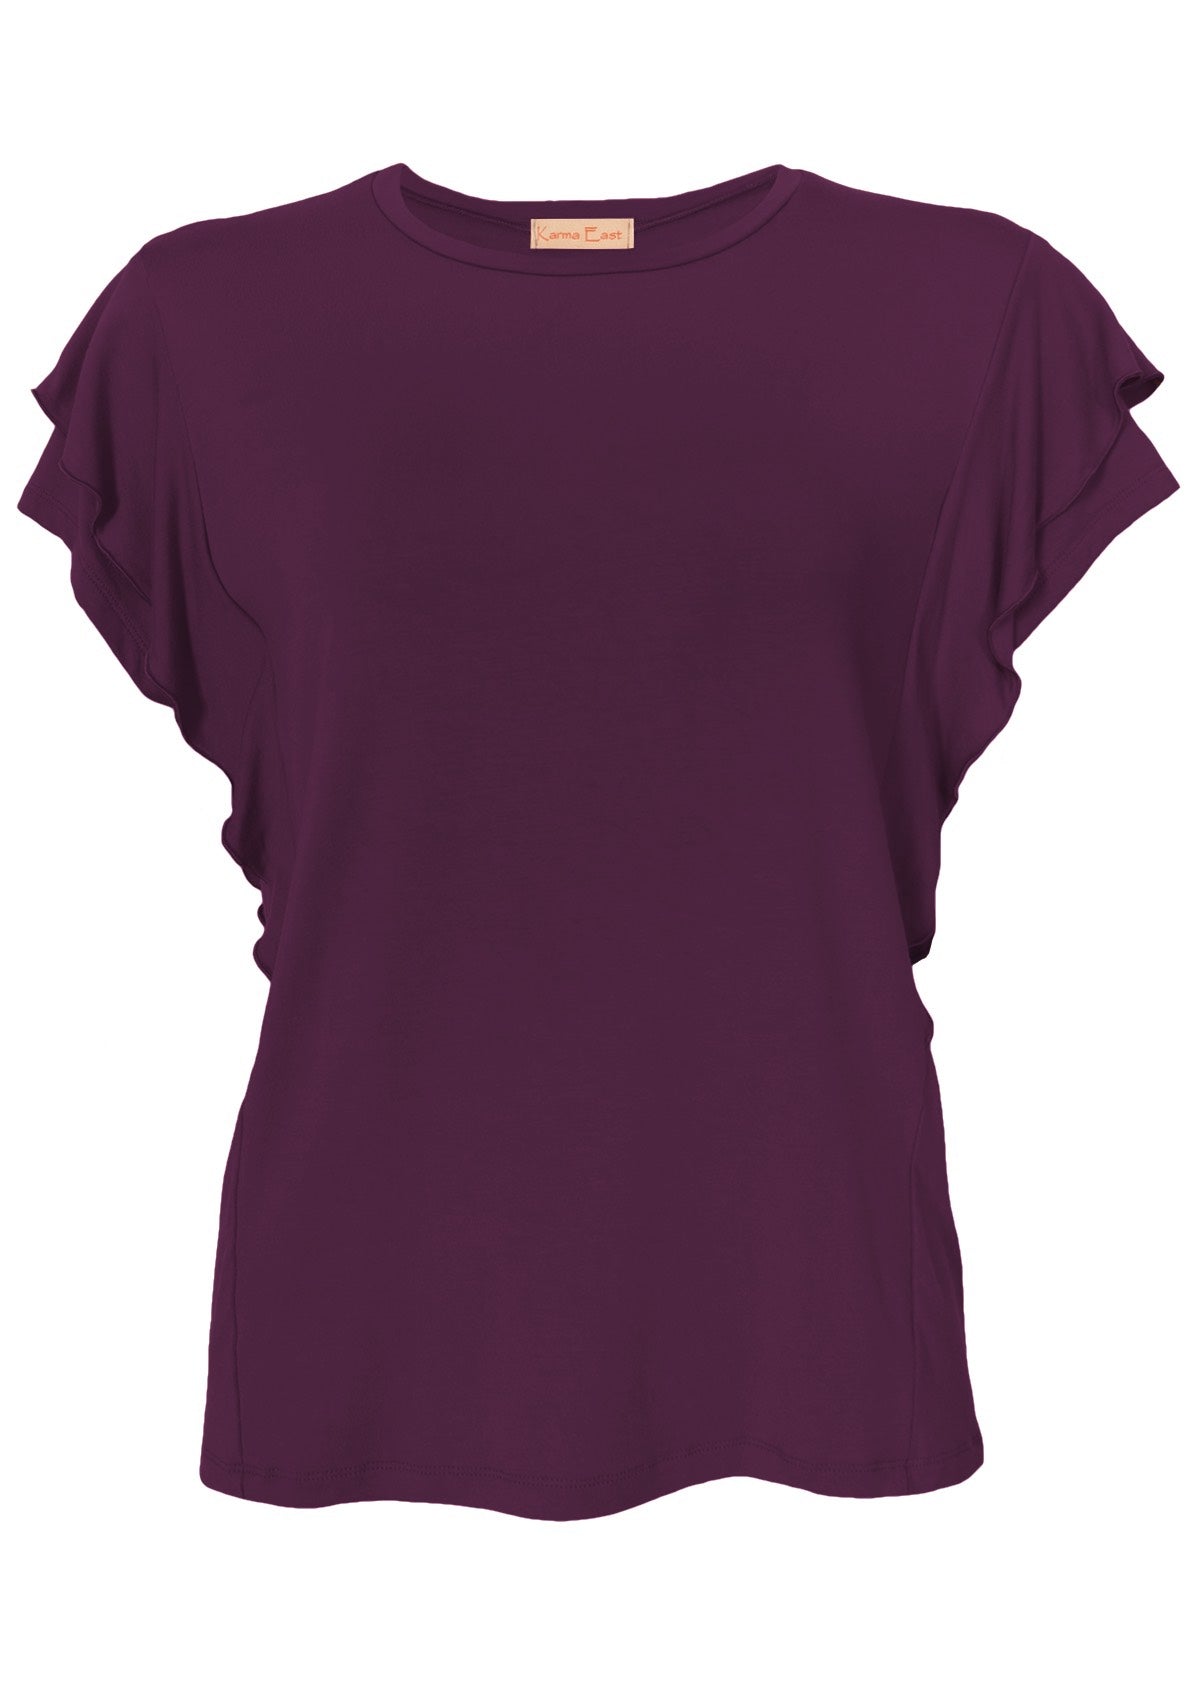 Front view of purple ruffle sleeve women's jersey top.